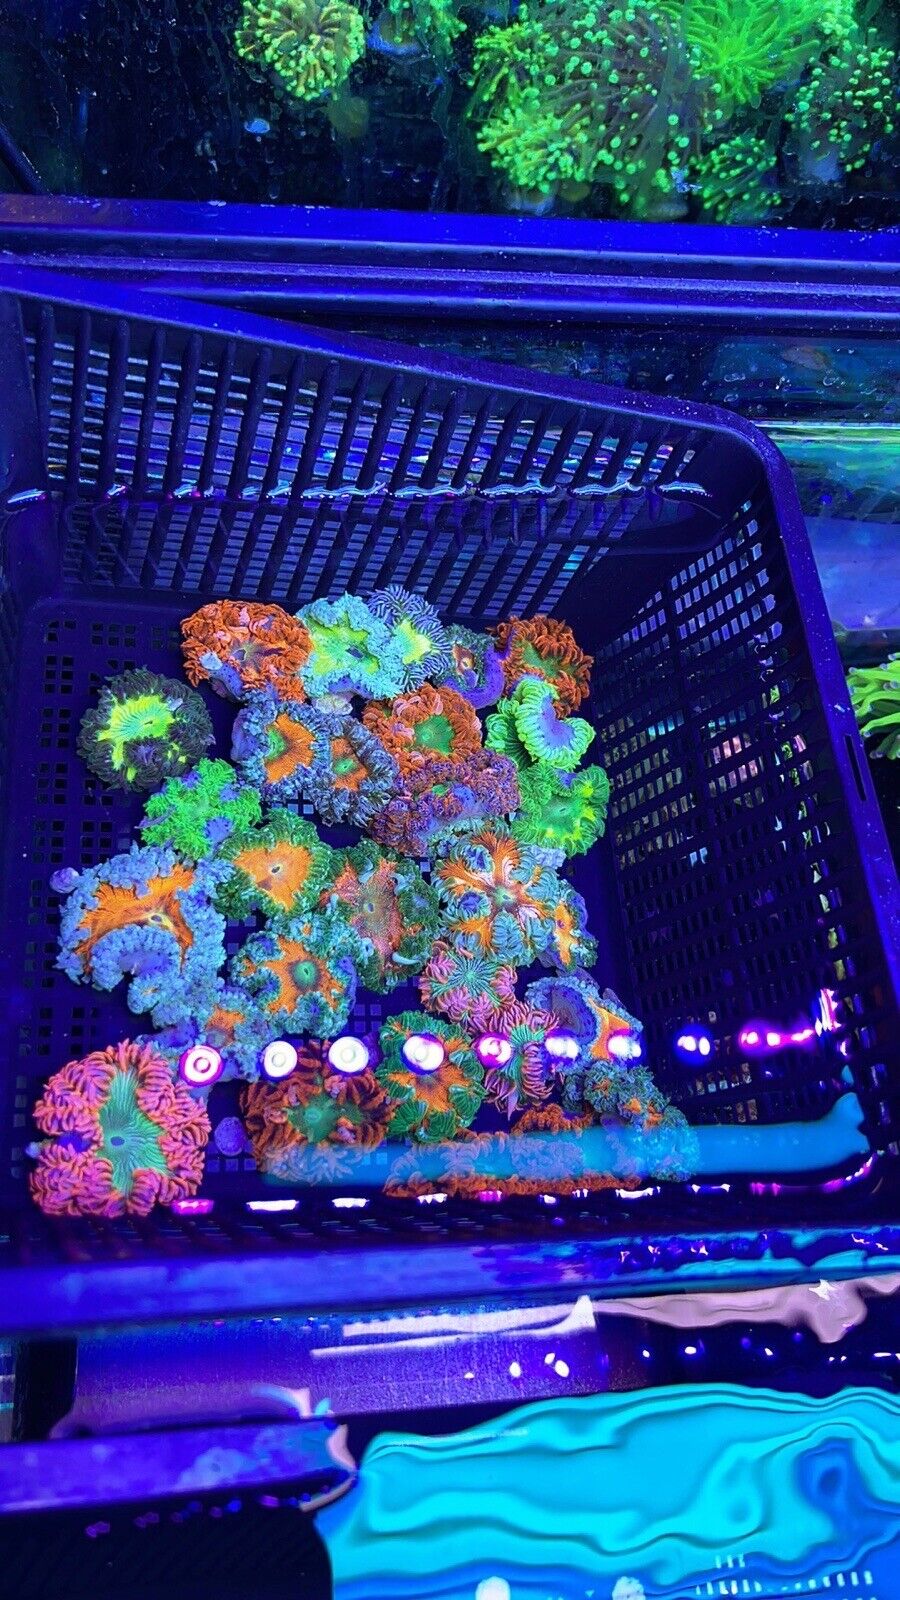 15 Pack Ultra Rock Flower Anemone RFA Rainbow Nem Live Coral Frag LPS SPS Florid